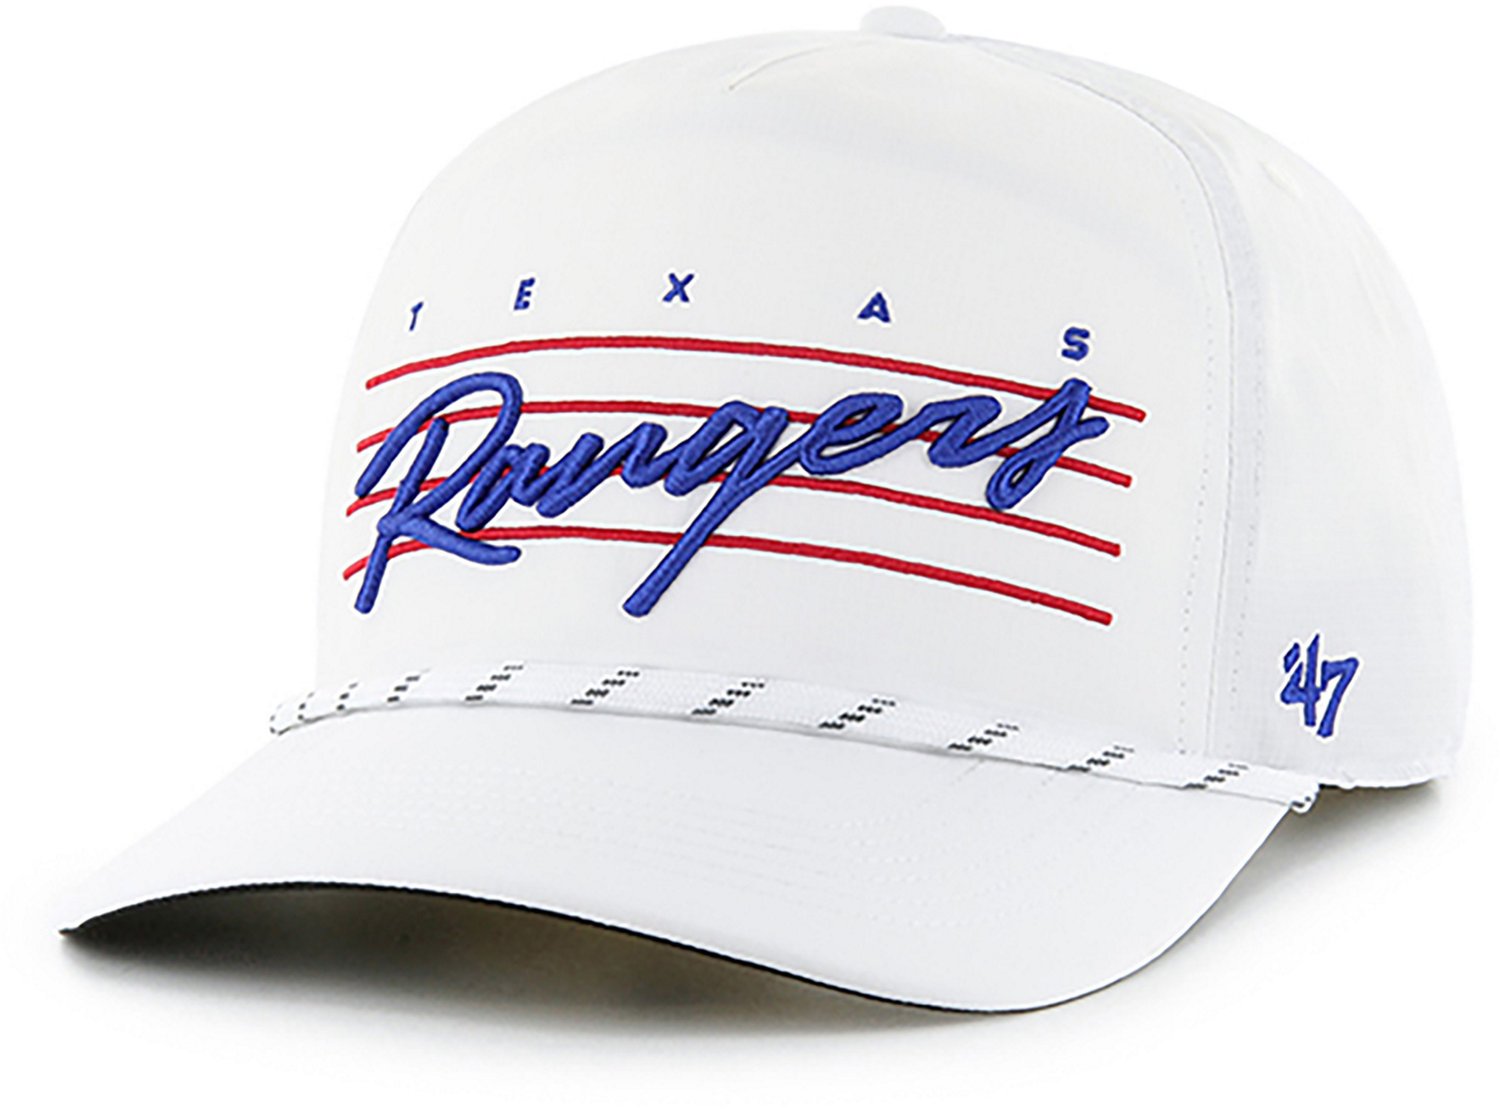 47 Texas Rangers Downburst Hitch Cap